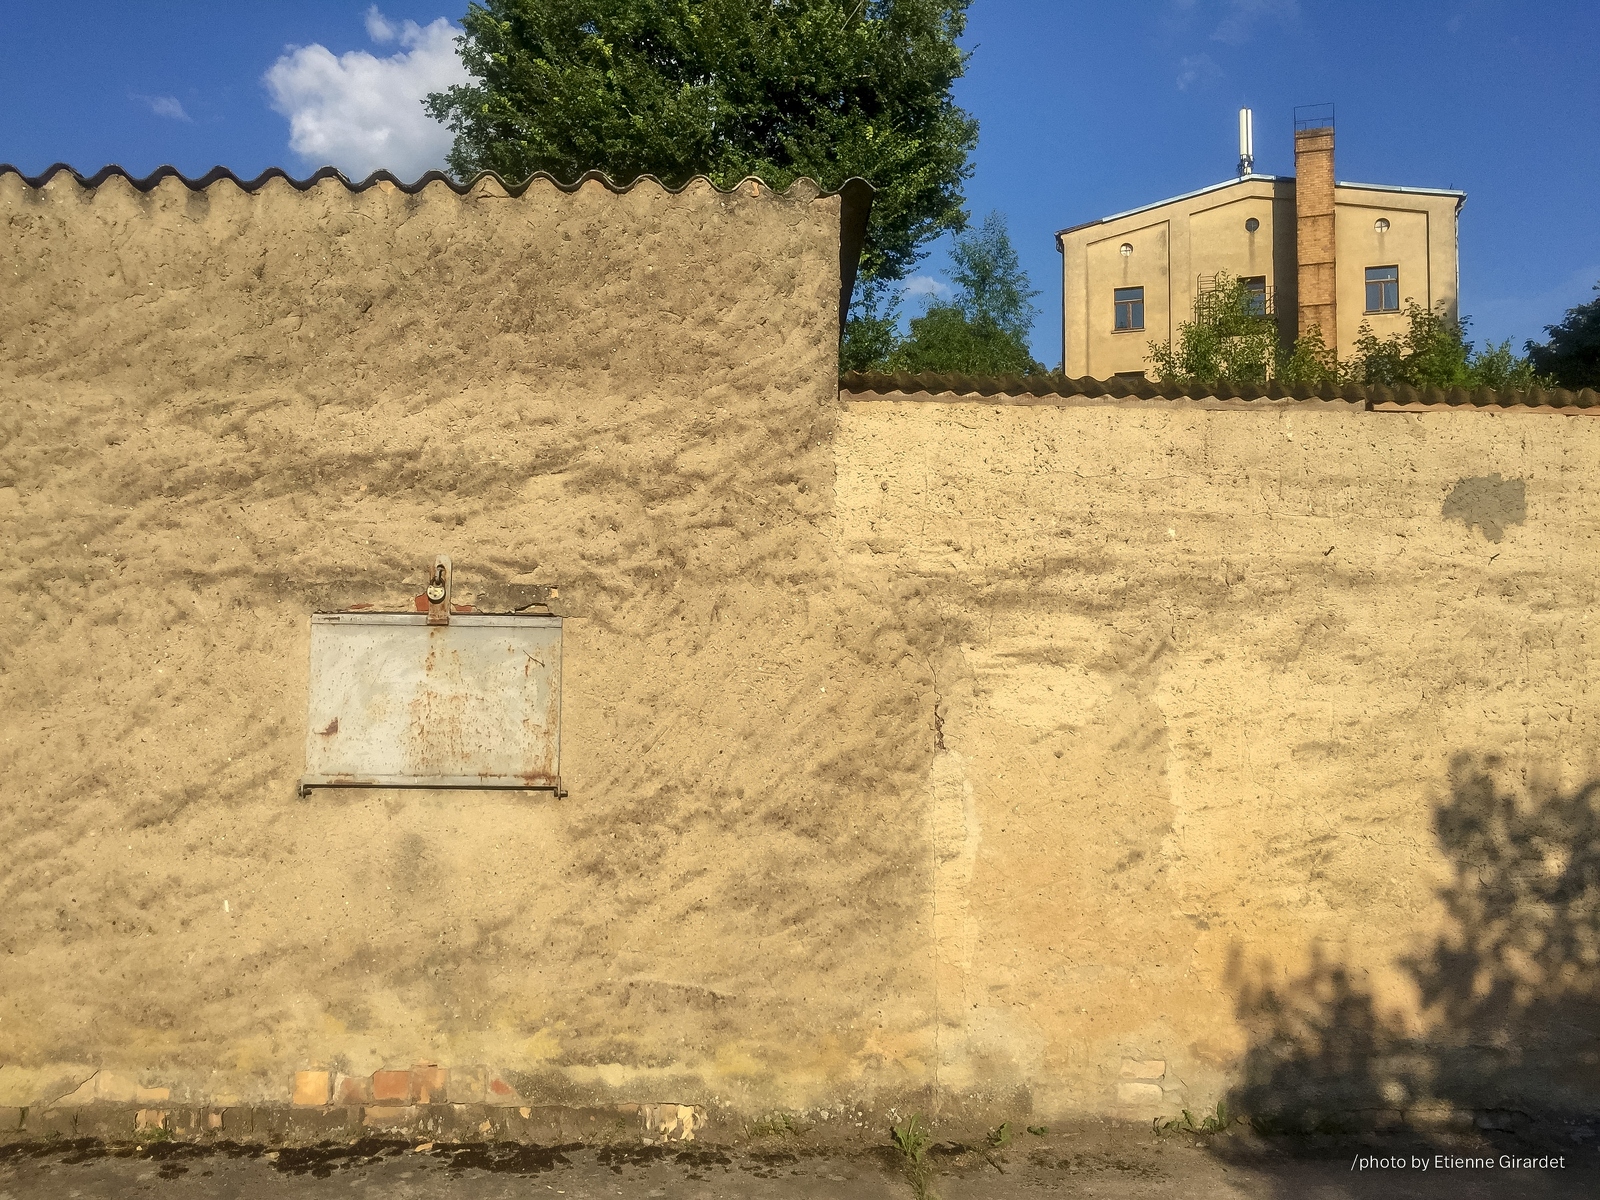 201807_16_IMG_0807-wall-house-sun-by-E-Girardet.jpg